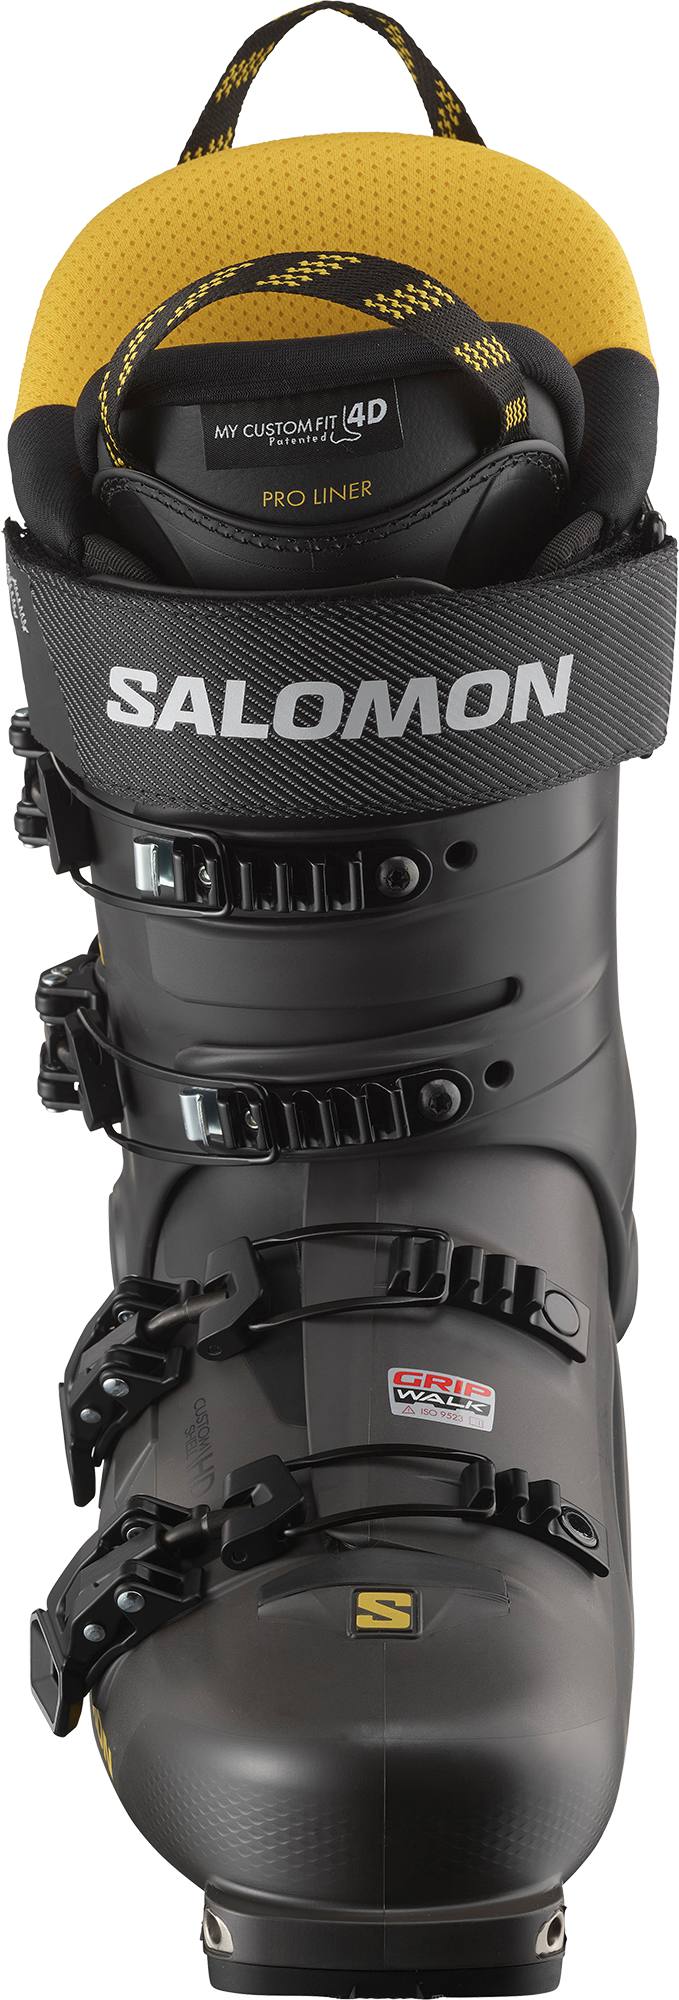 Salomon Shift Pro 120 AT 22/23 Beluga 30